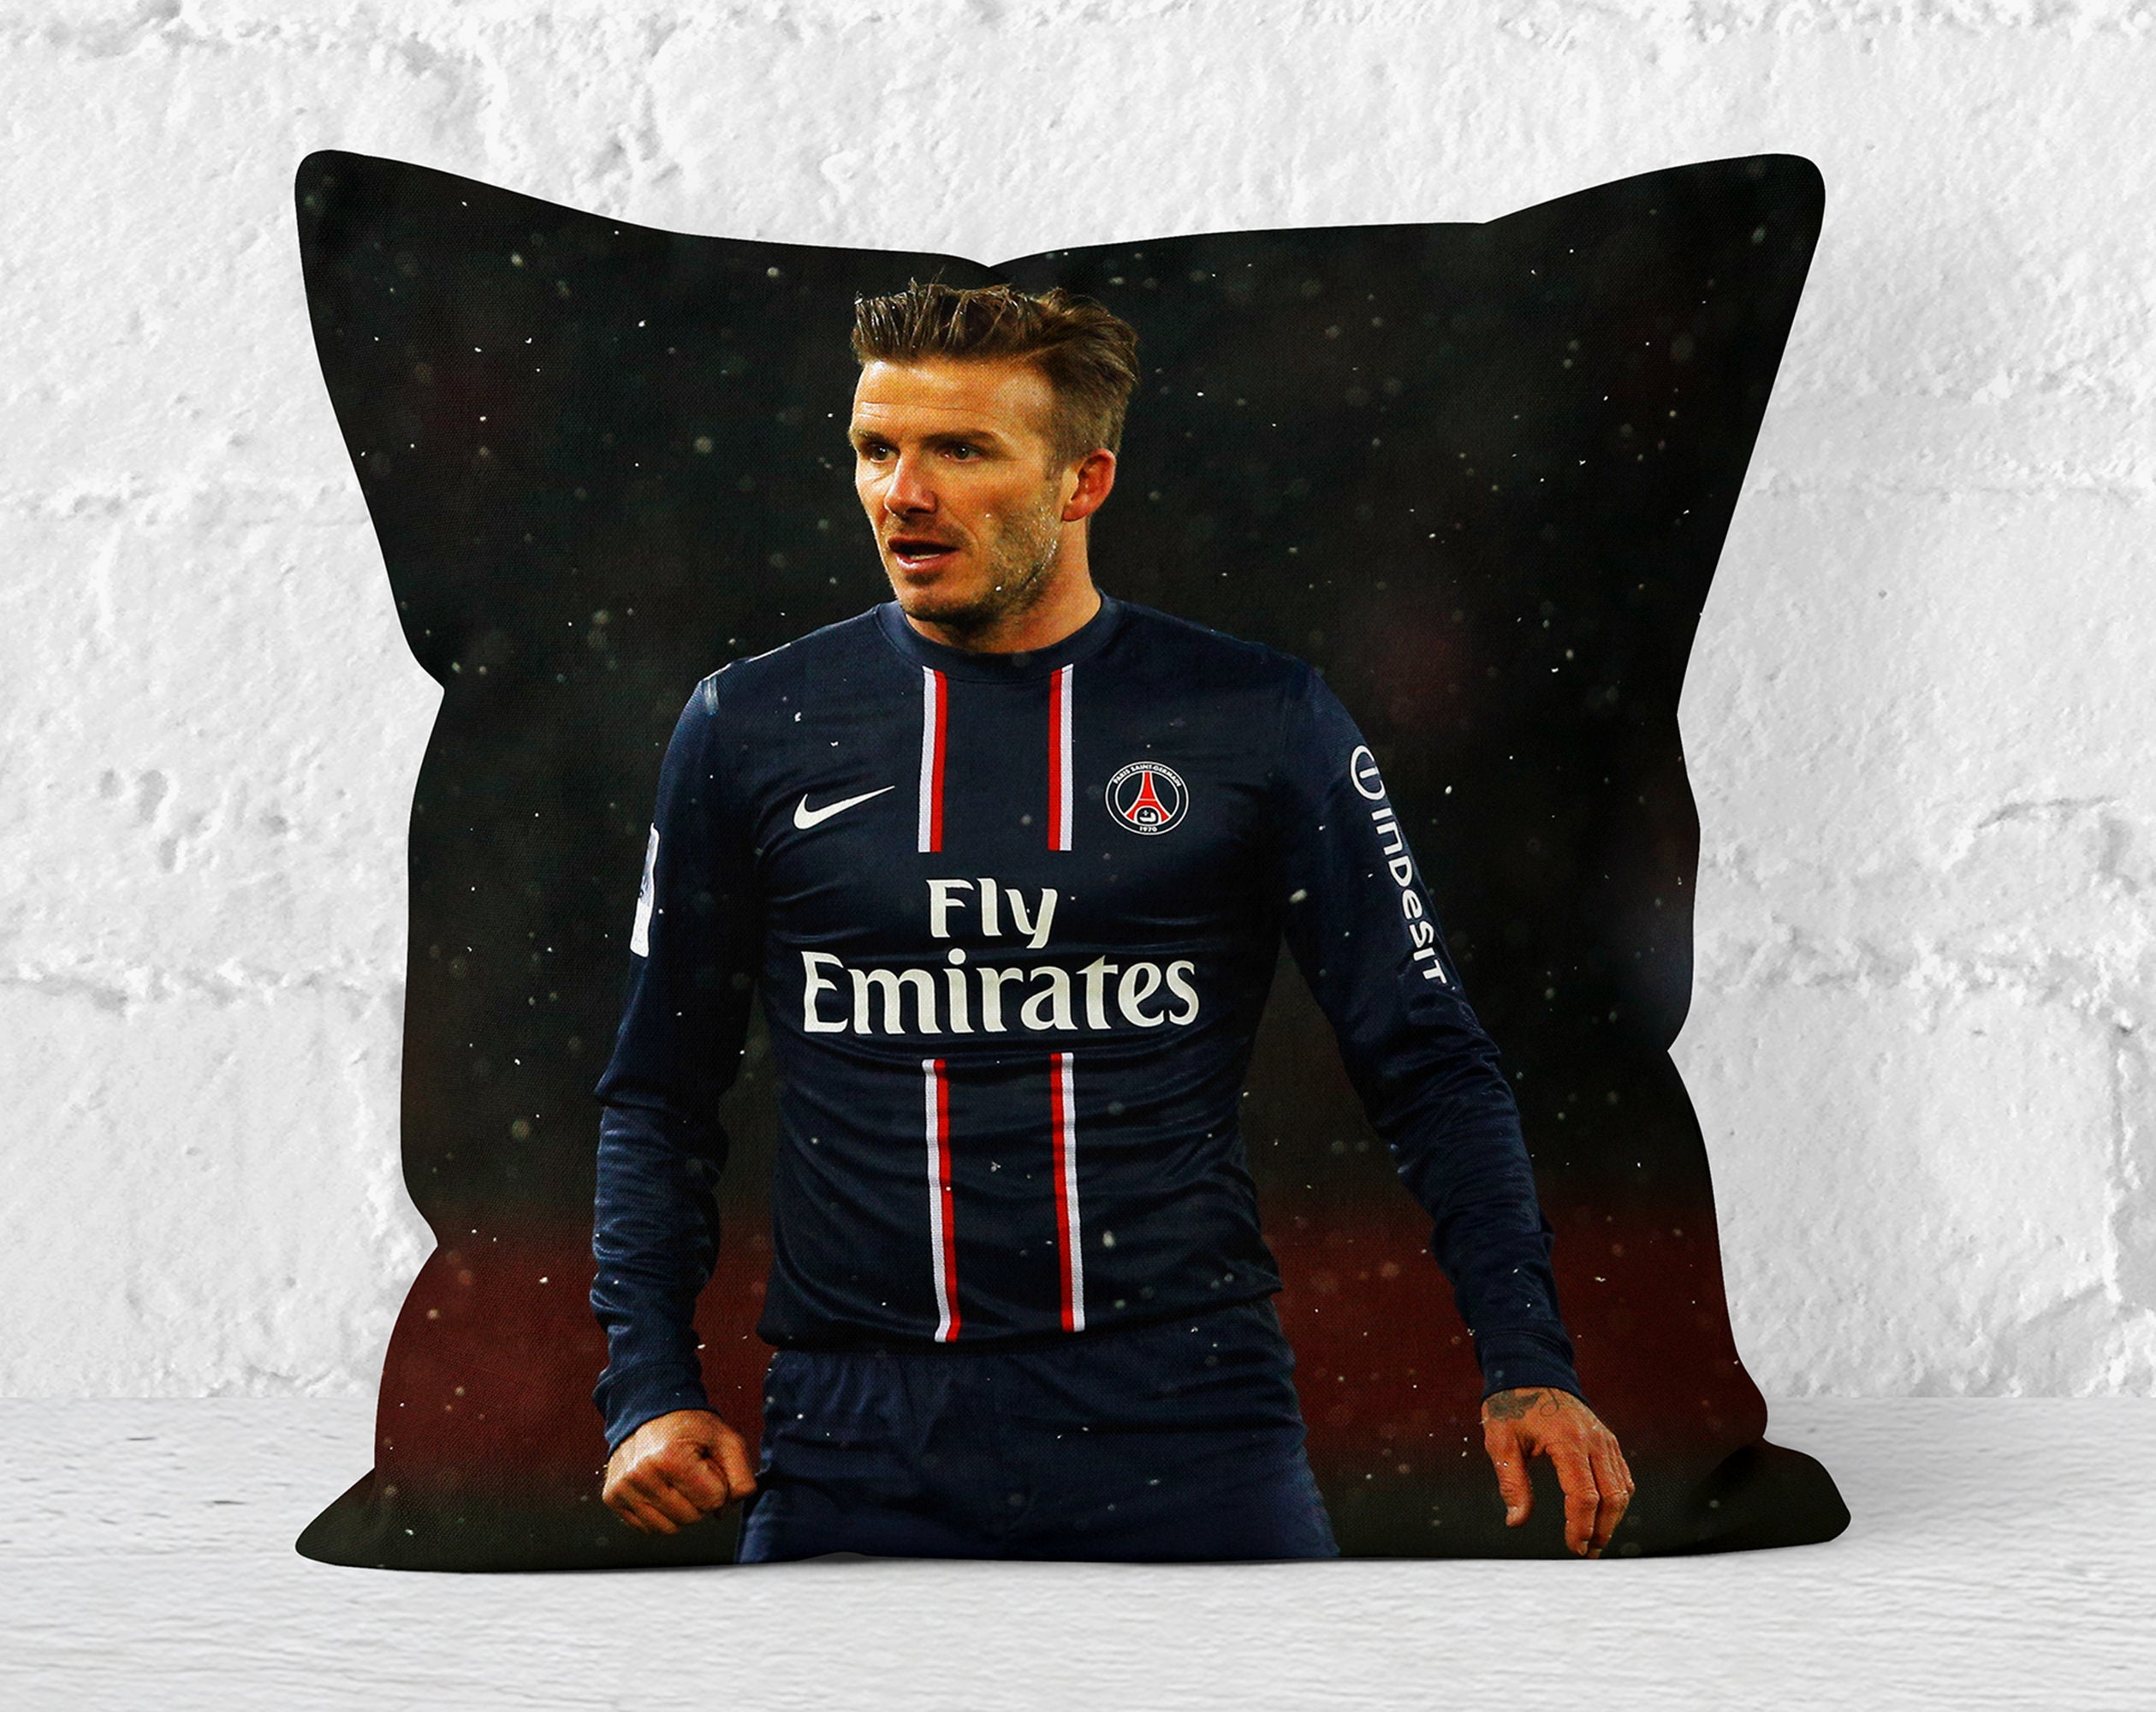 David Beckham 2 Throw Pillow for Sale by Cekusko